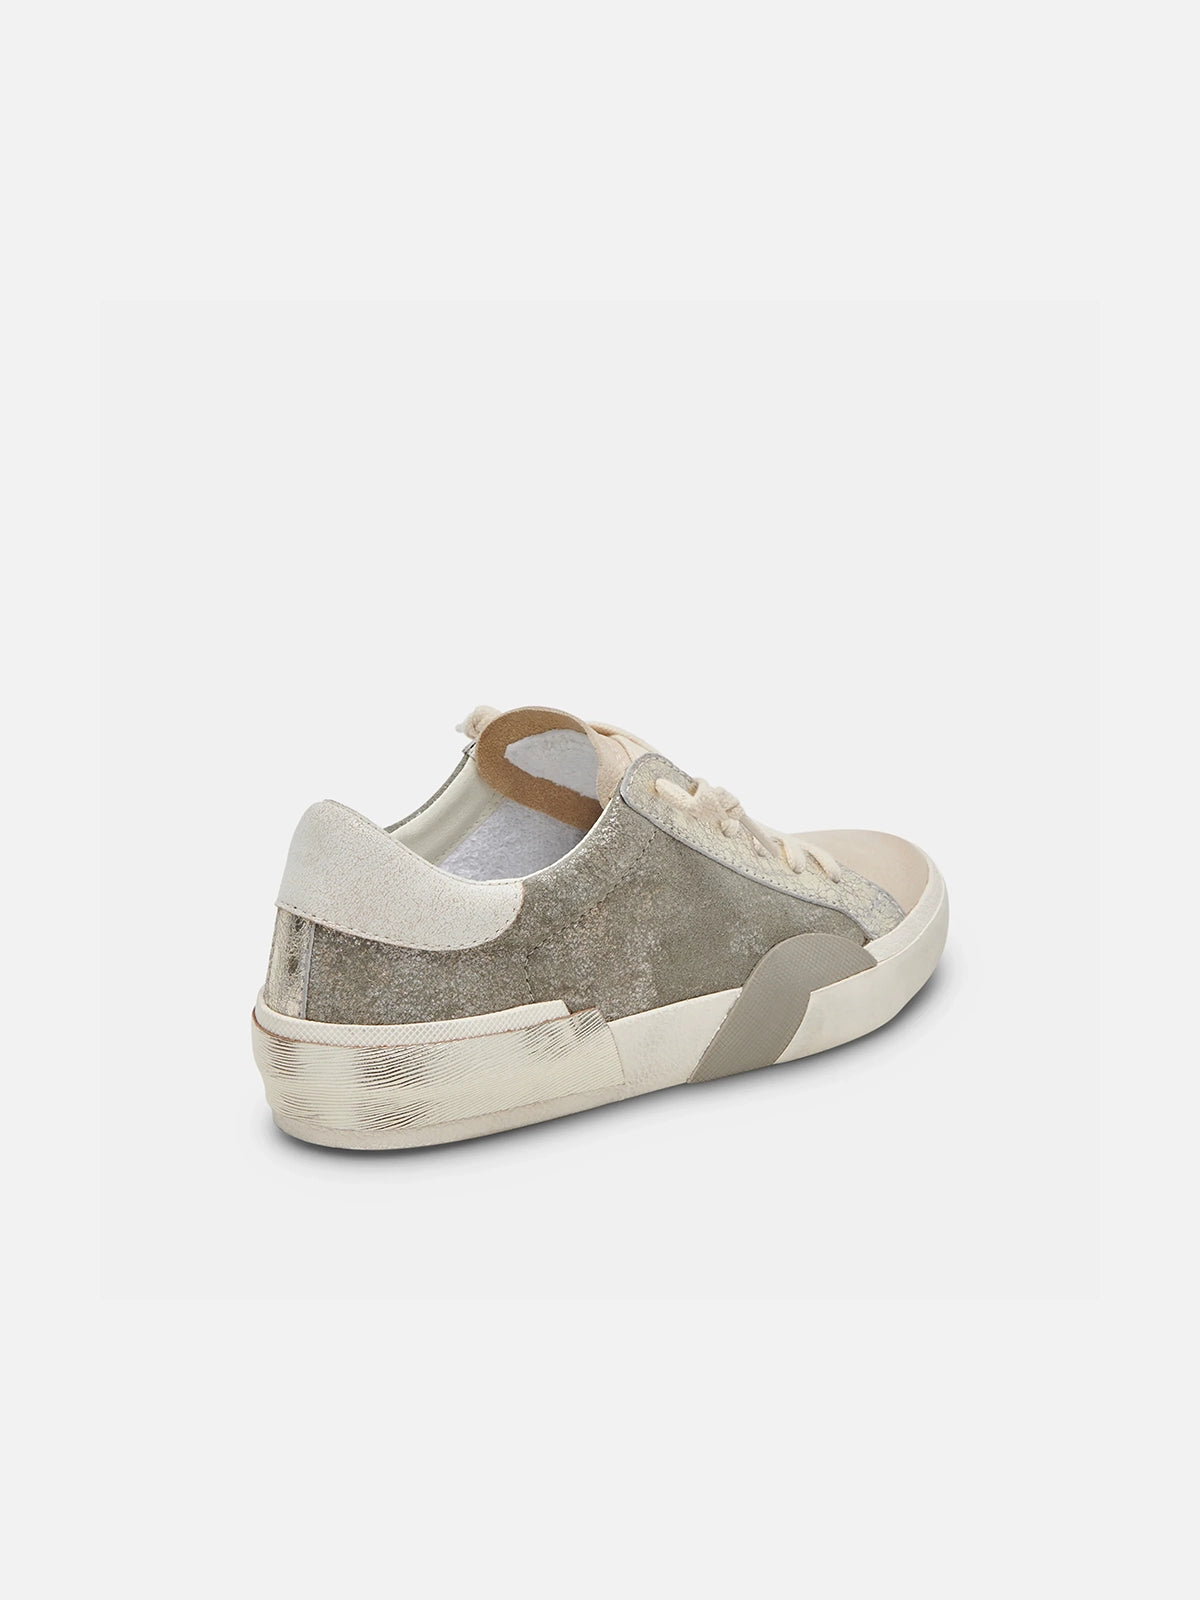 dolce vita zina sneakers in granite metallic suede